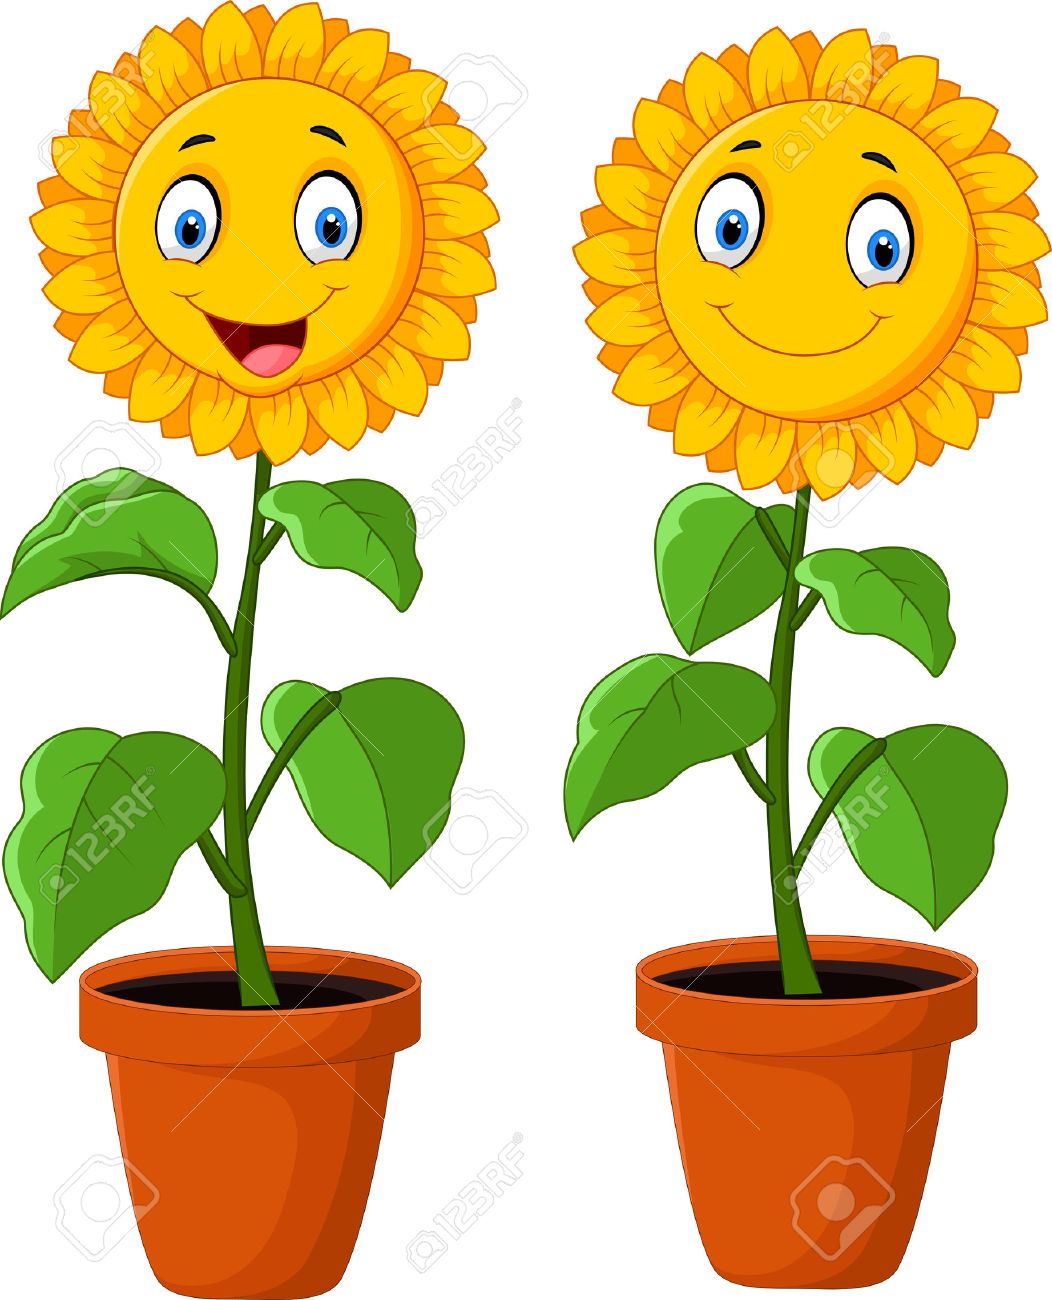 Happy sunflower clipart